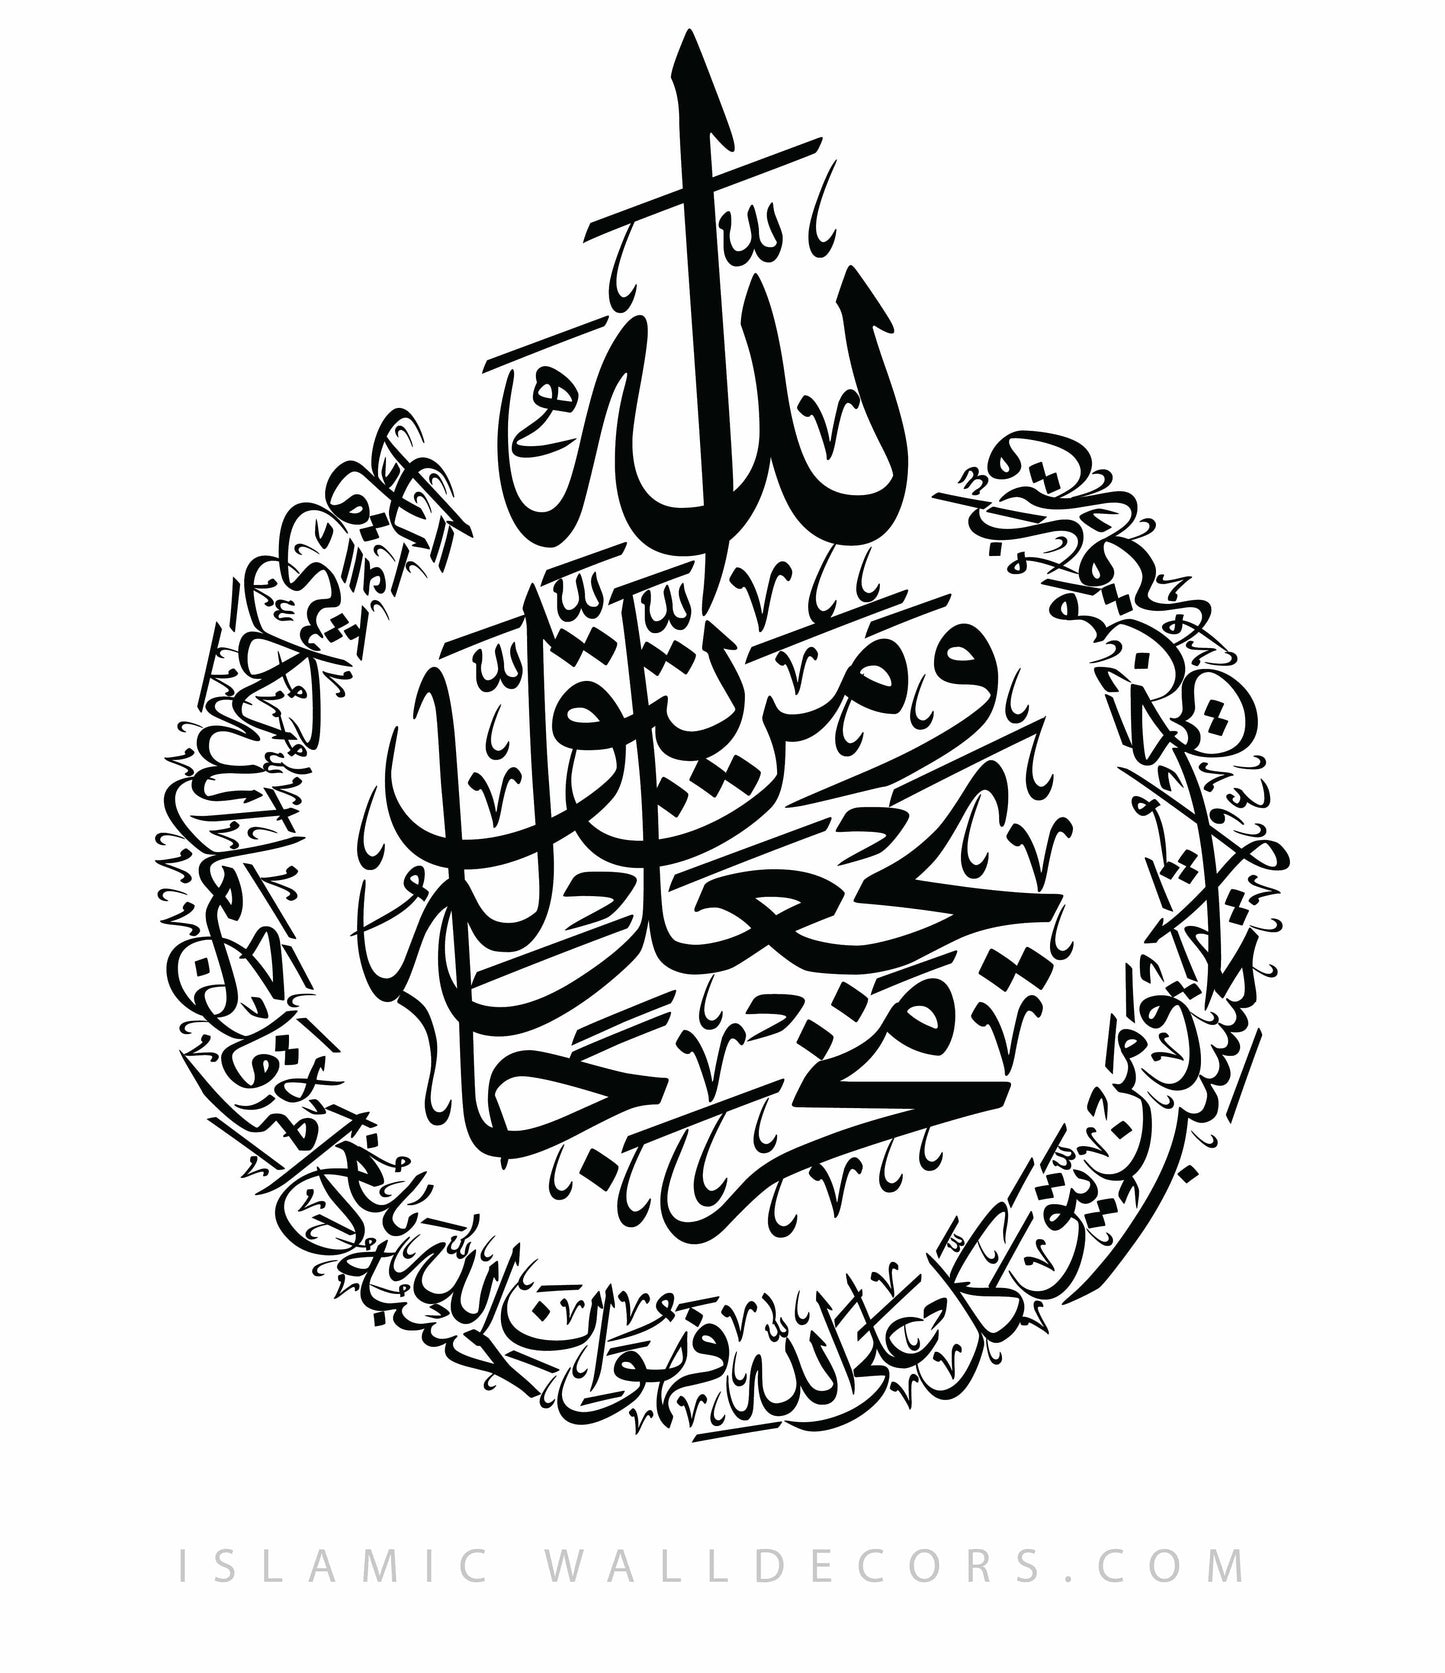 Surah Talaq for Barakat in Rizq (Income) - Arabic Calligraphy in Thuluth Script - islamicwalldecors